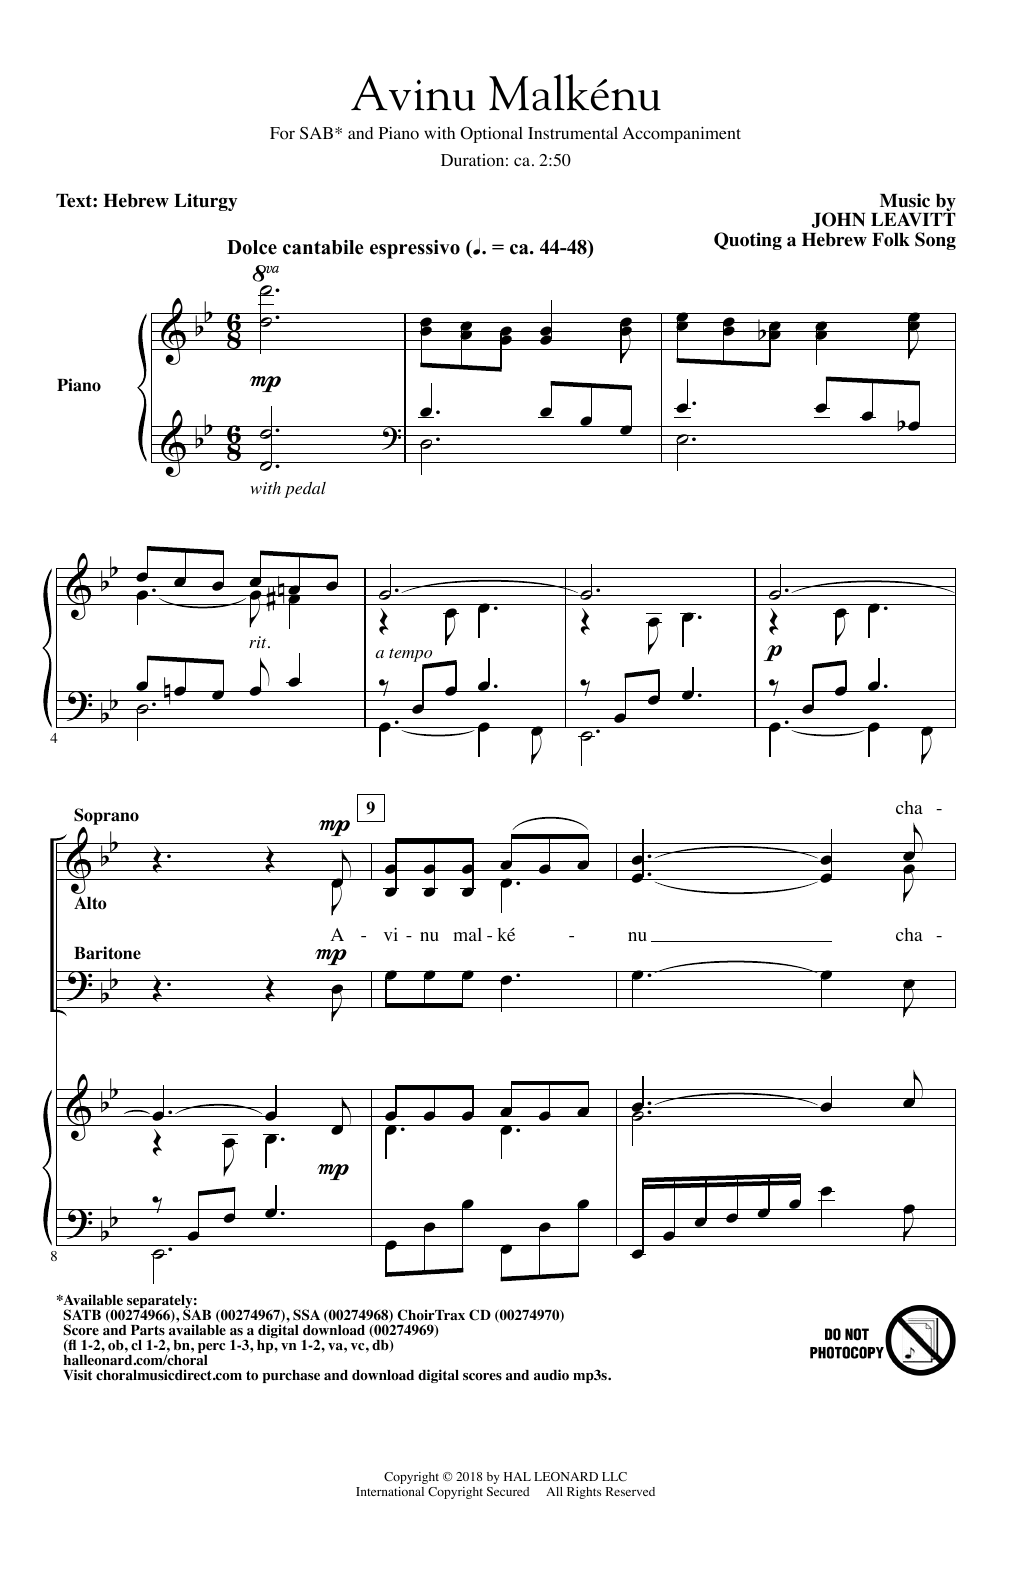 Download John Leavitt Avinu Malkenu Sheet Music and learn how to play SSA Choir PDF digital score in minutes